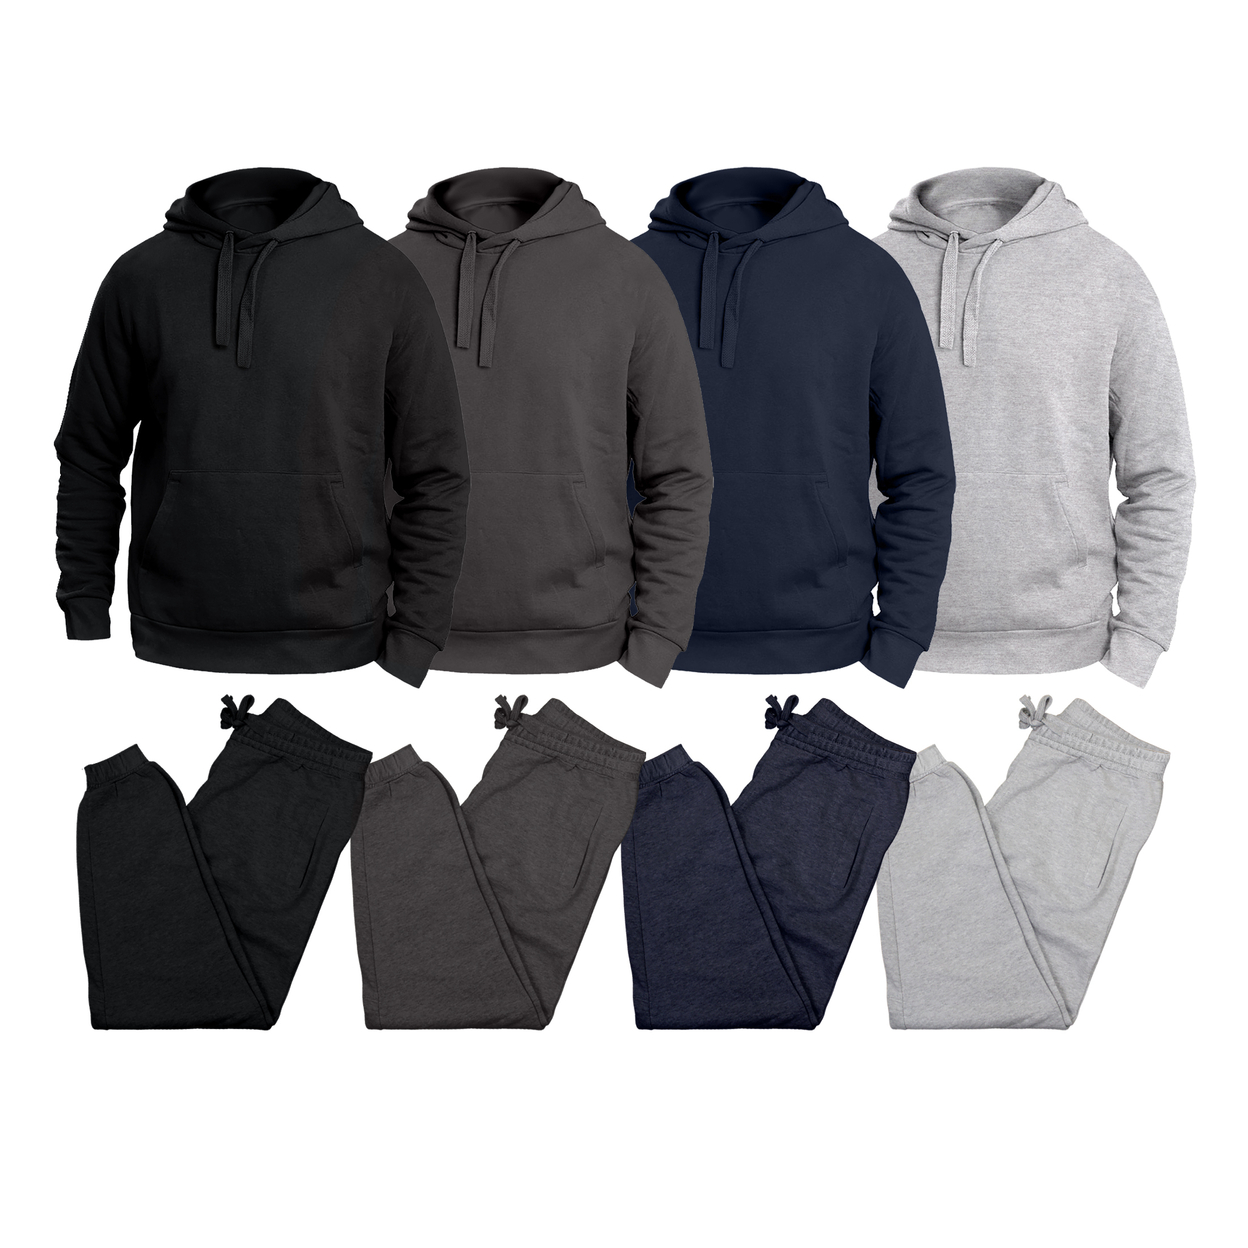 Multi-Pack: Big & Tall Men's Winter Warm Cozy Athletic Fleece Lined Multi-Pocket Cargo Sweatsuit - Charcoal, 1-pack, Medium